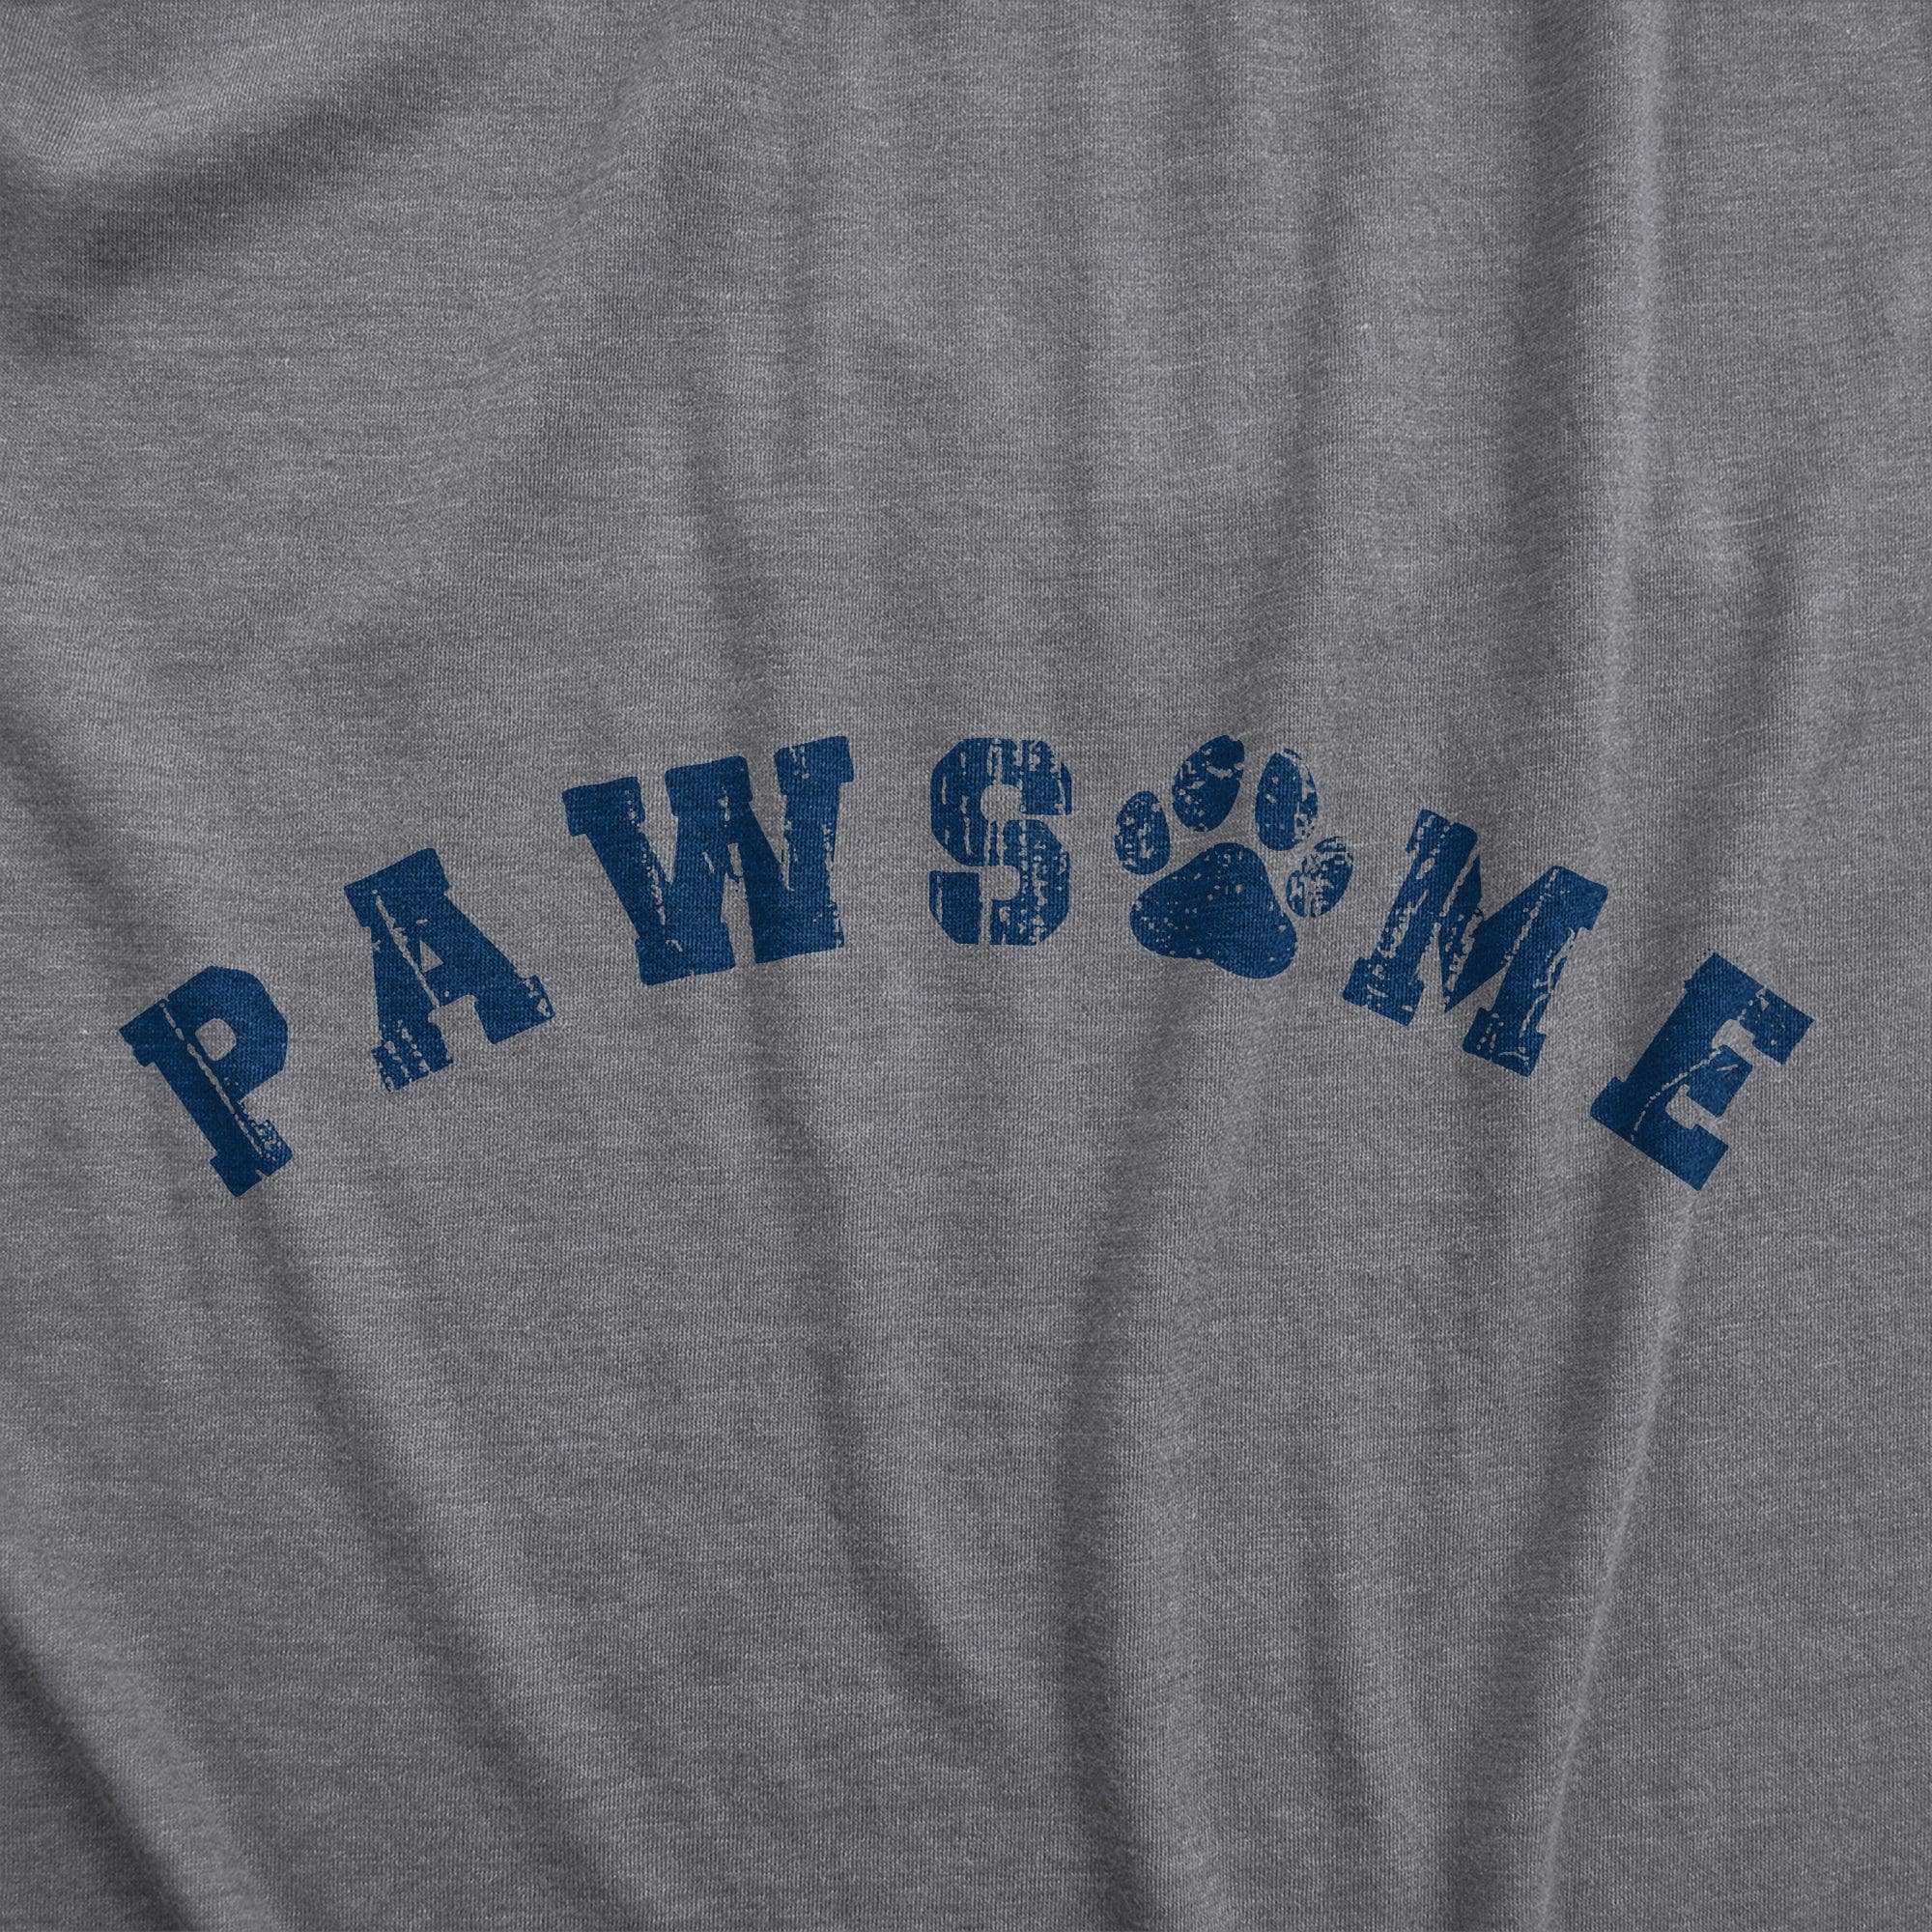 Pawsome Women's Tshirt  -  Crazy Dog T-Shirts